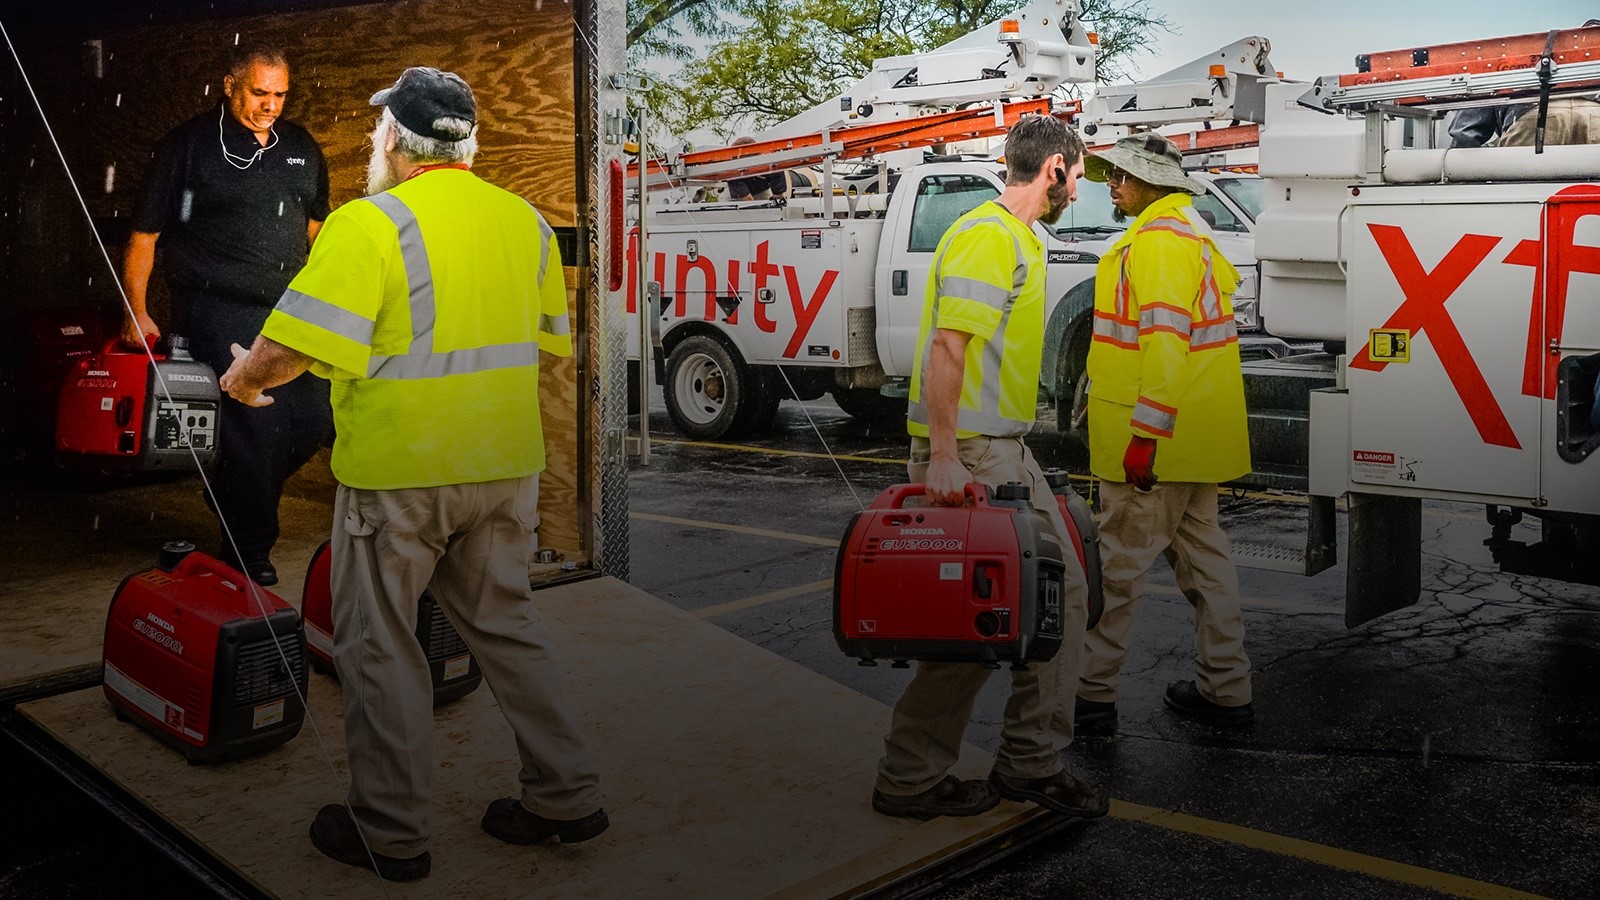 Xfinity response team taking generators from truck